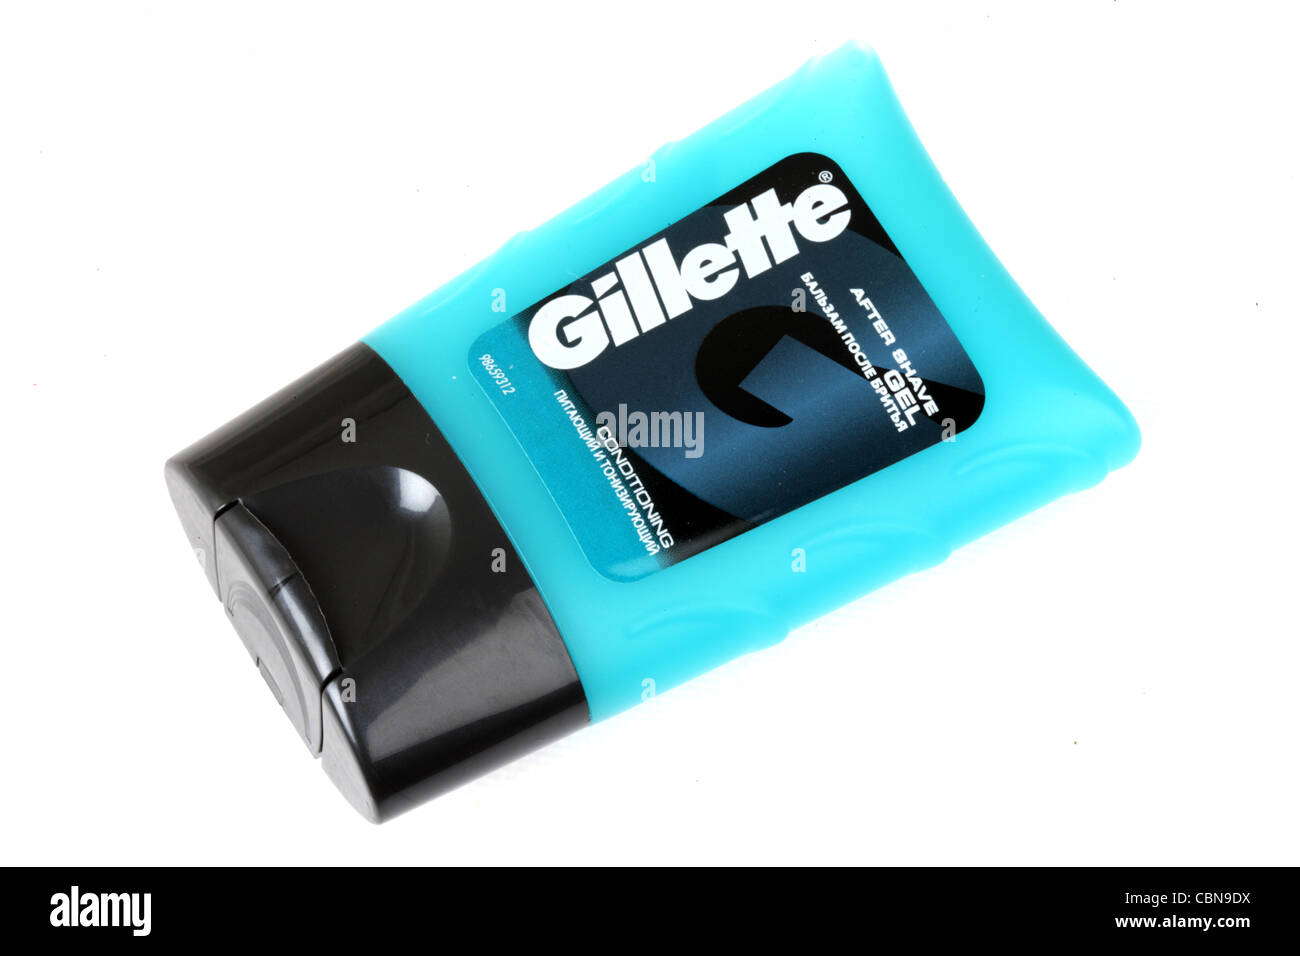 Gillette After Shave Gel Stock Photo: 41650390 - Alamy